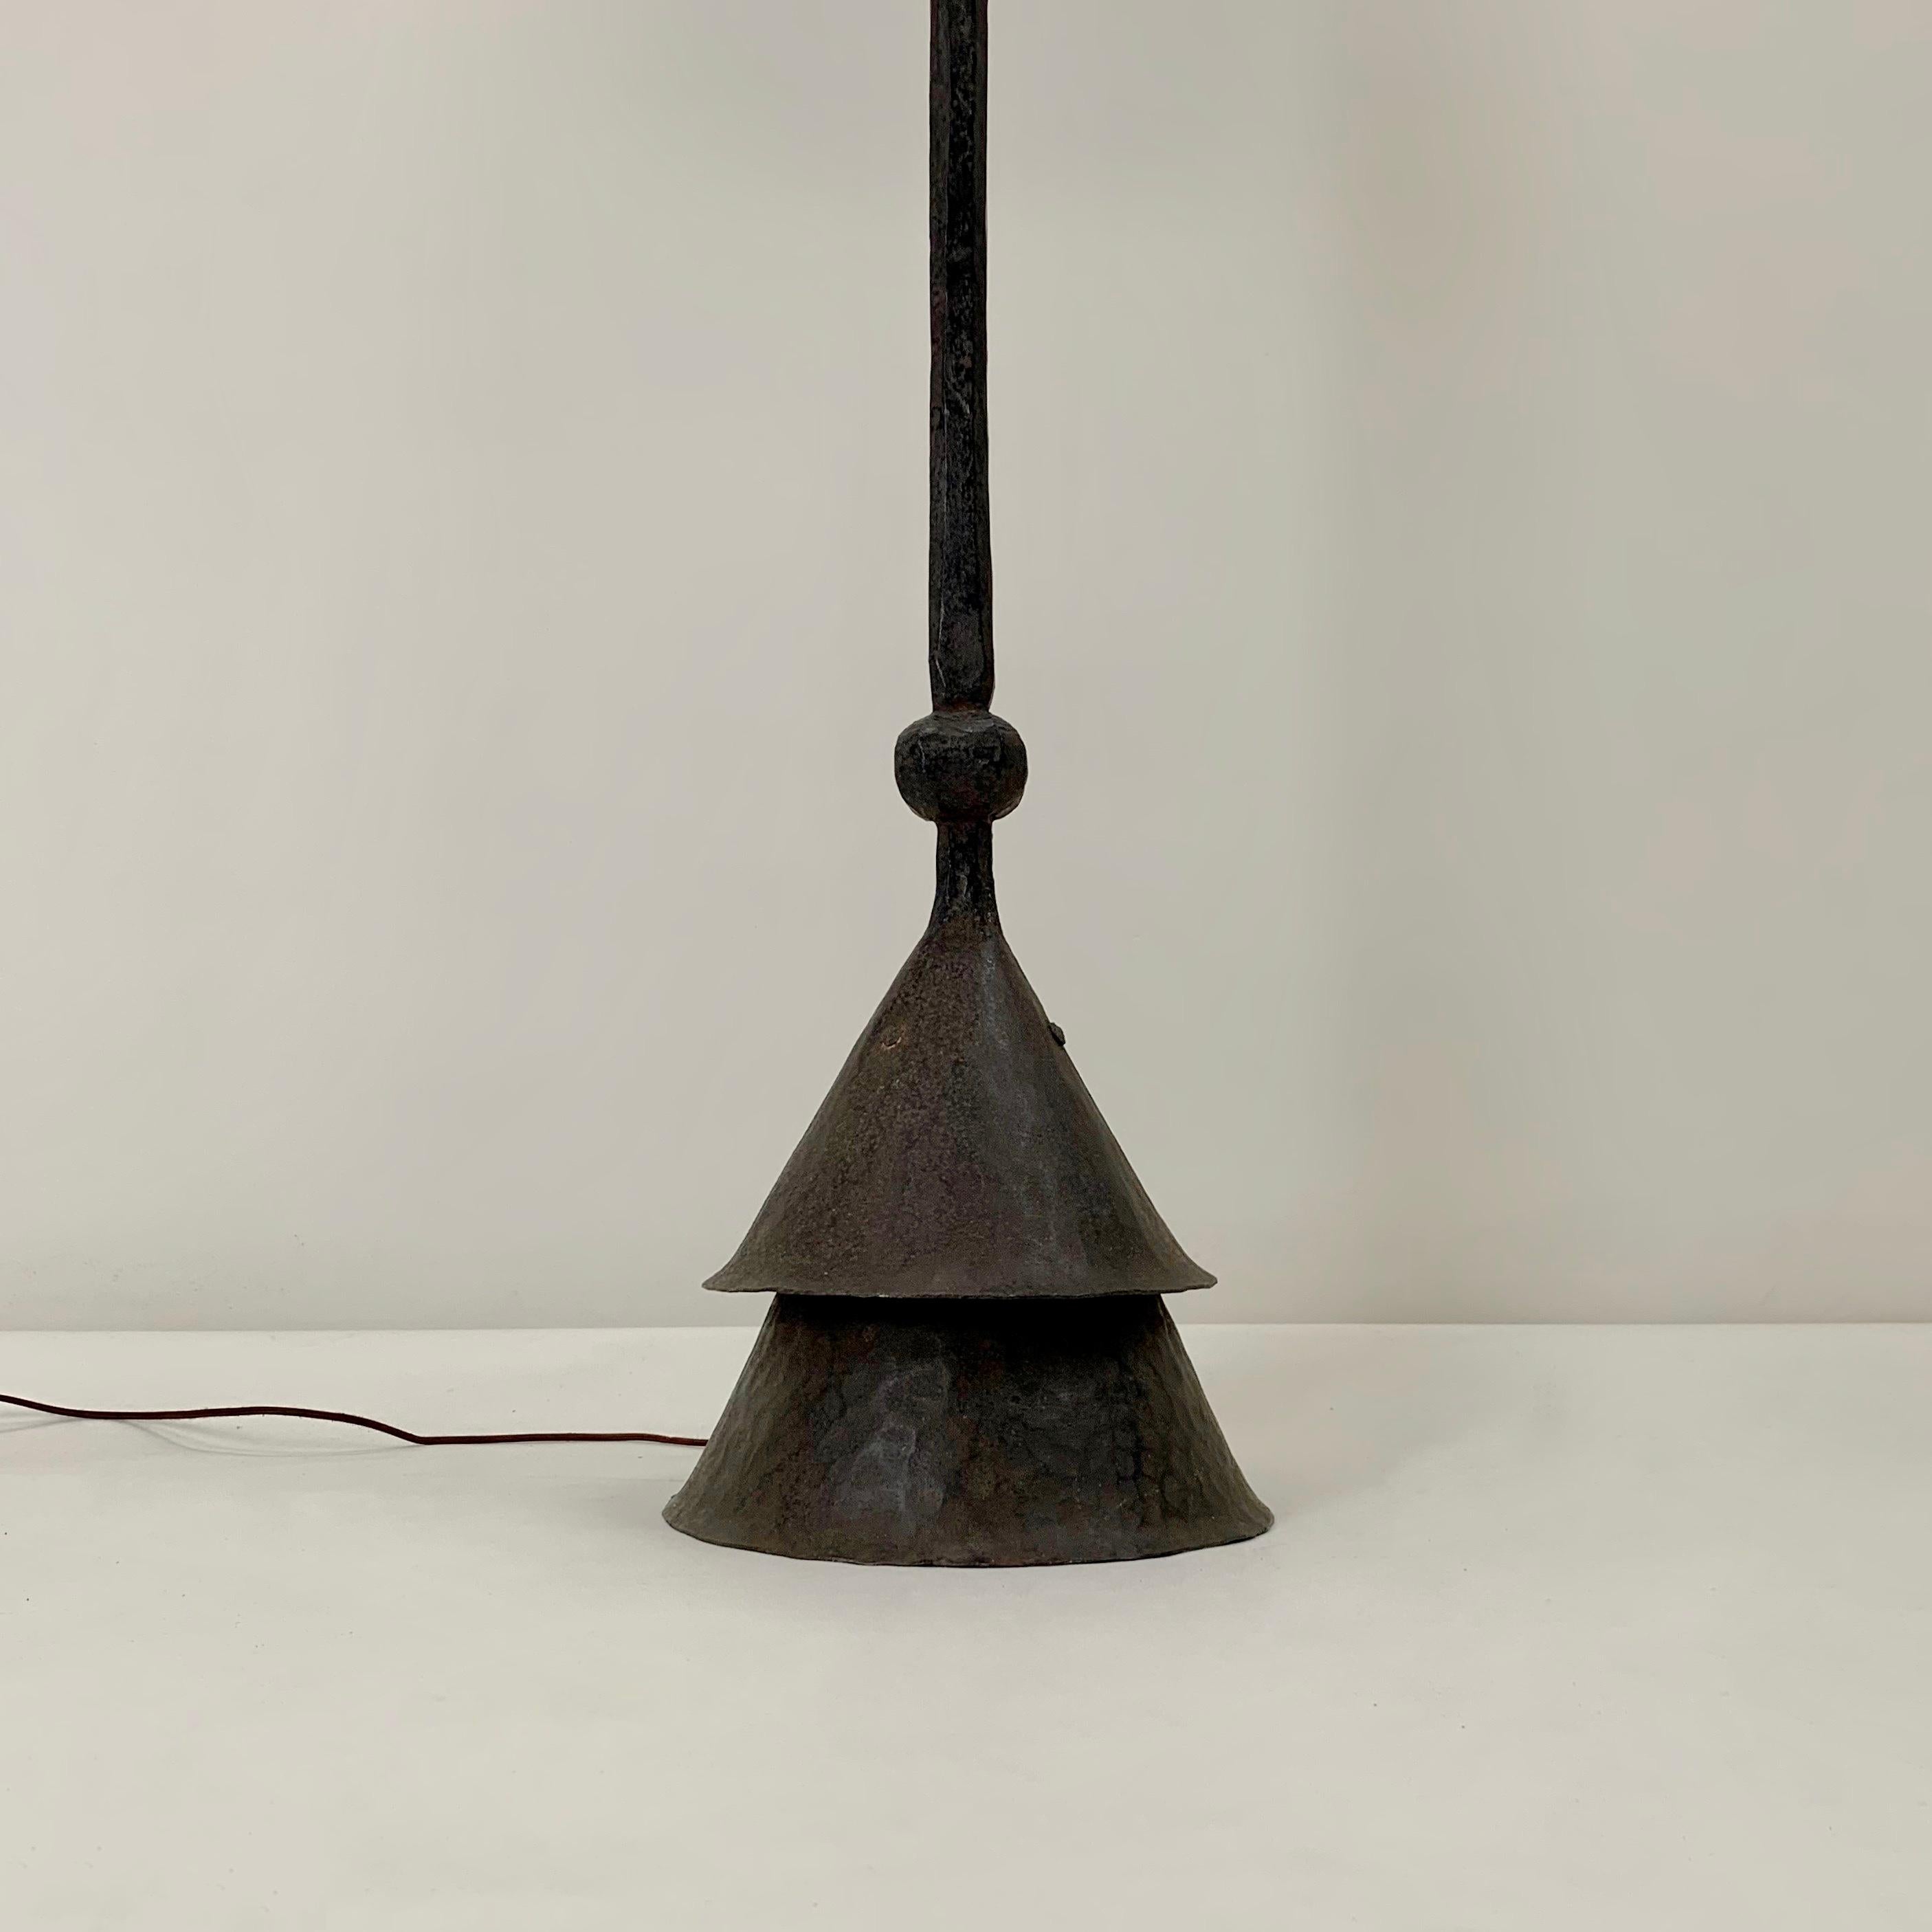 Fabric Mid-Century Decorative Wrought Iron Floor Lamp, circa 1950, France.